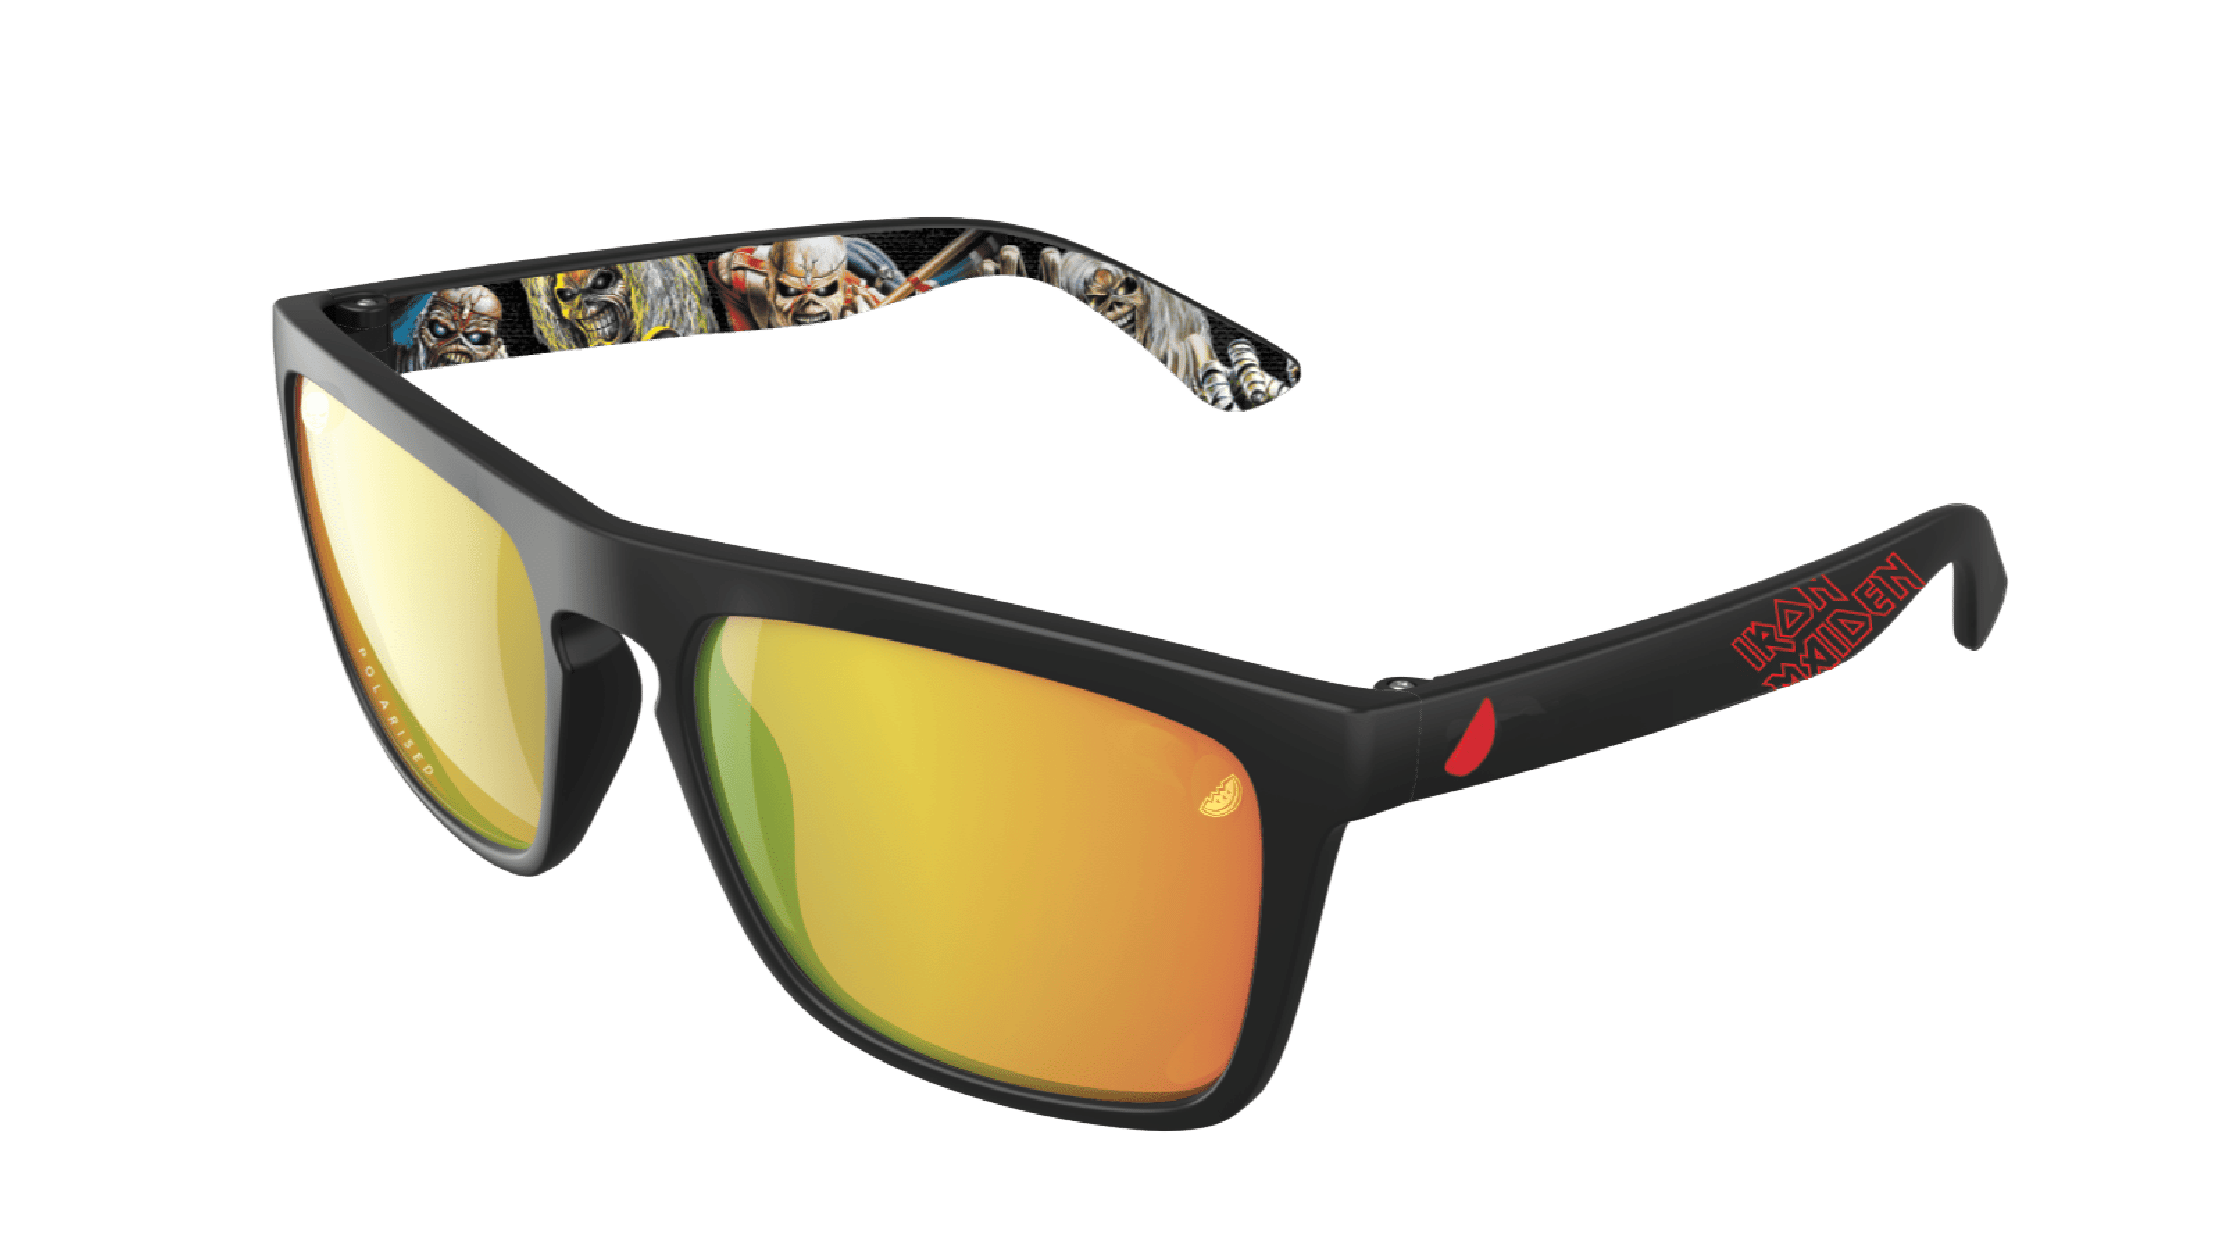 Arcade Sunglasses polarised Iron-Maiden Black Eddies Red-Chrome Side View